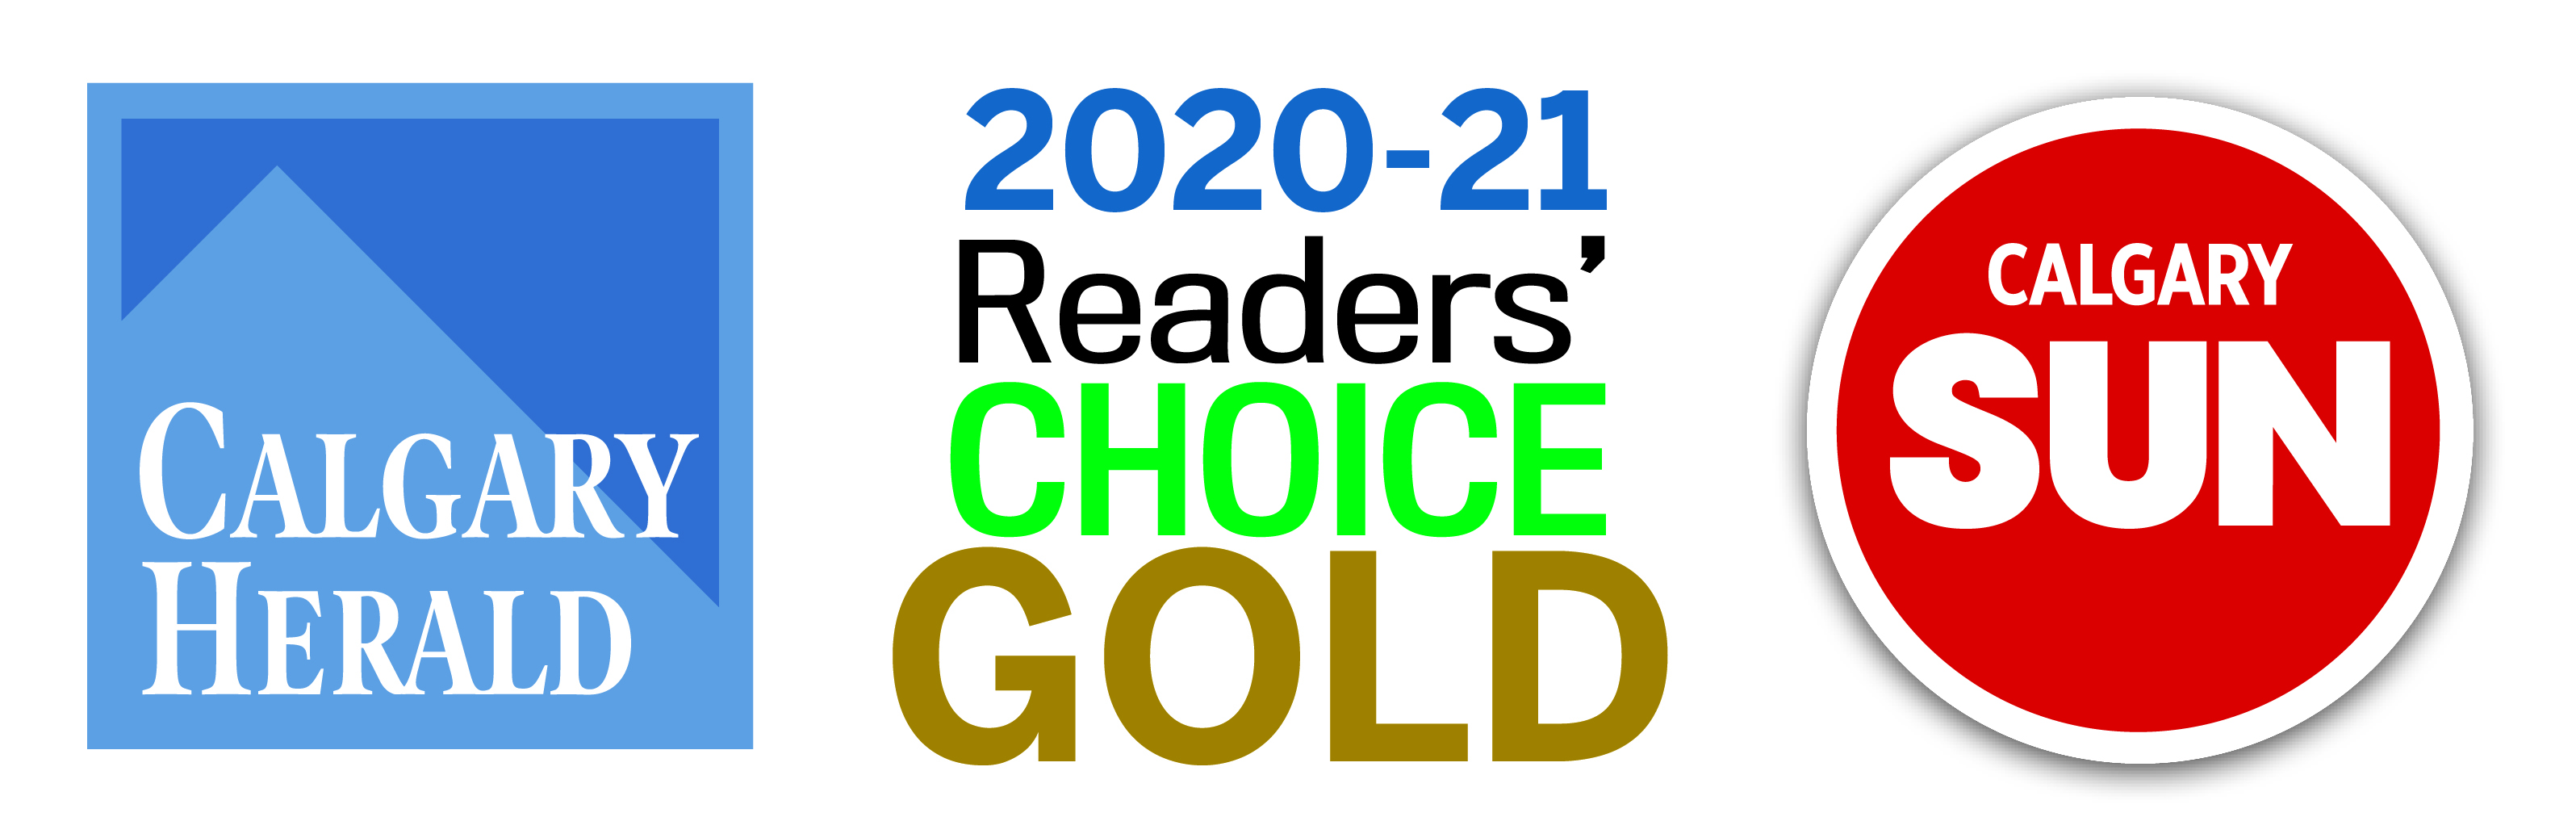 Readers' Choice GOLD 2020-21.jpg